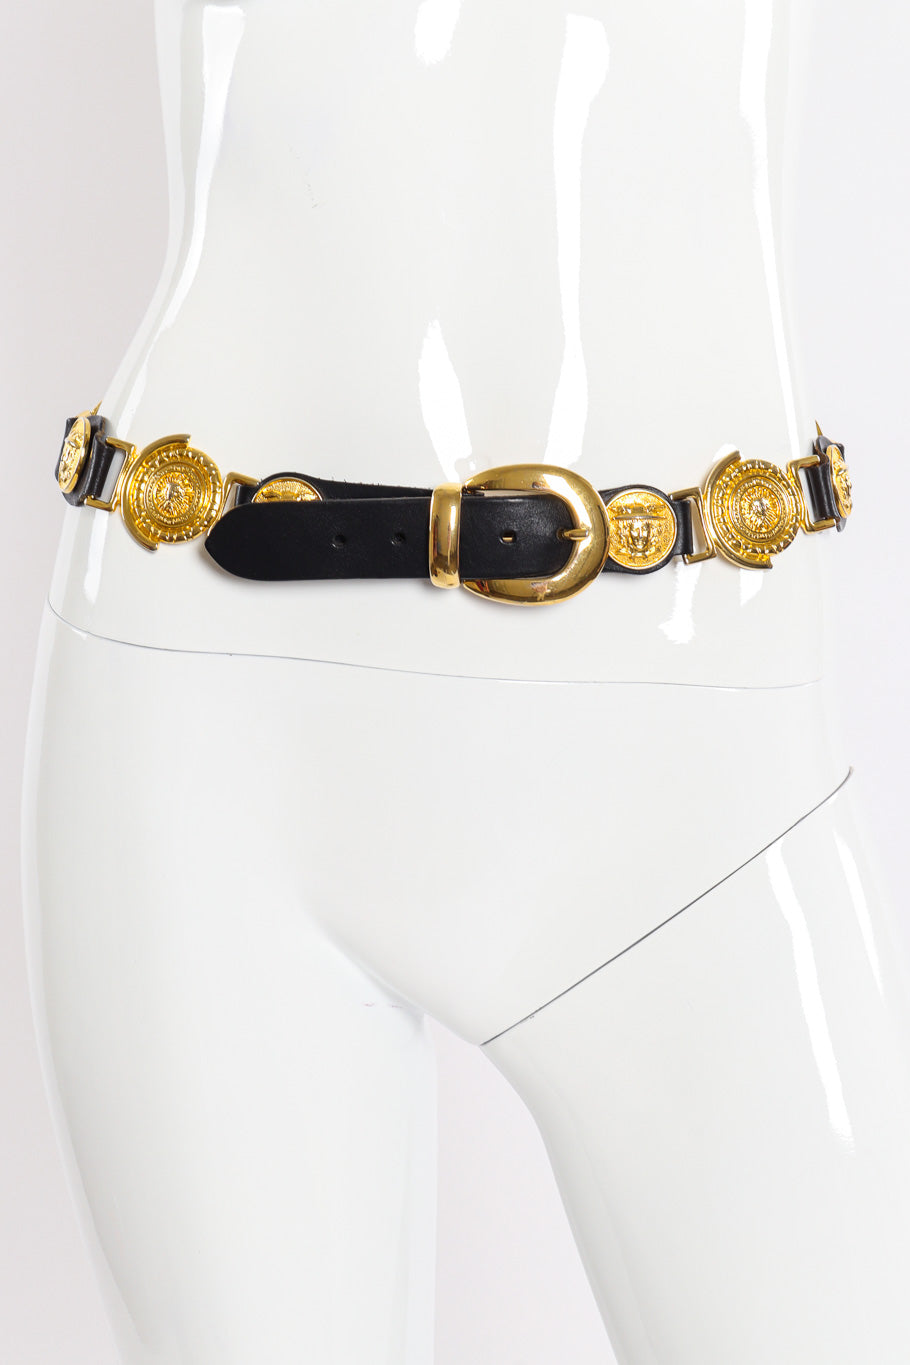 Medallion linked leather belt by Milos on white background on mannequin @recessla